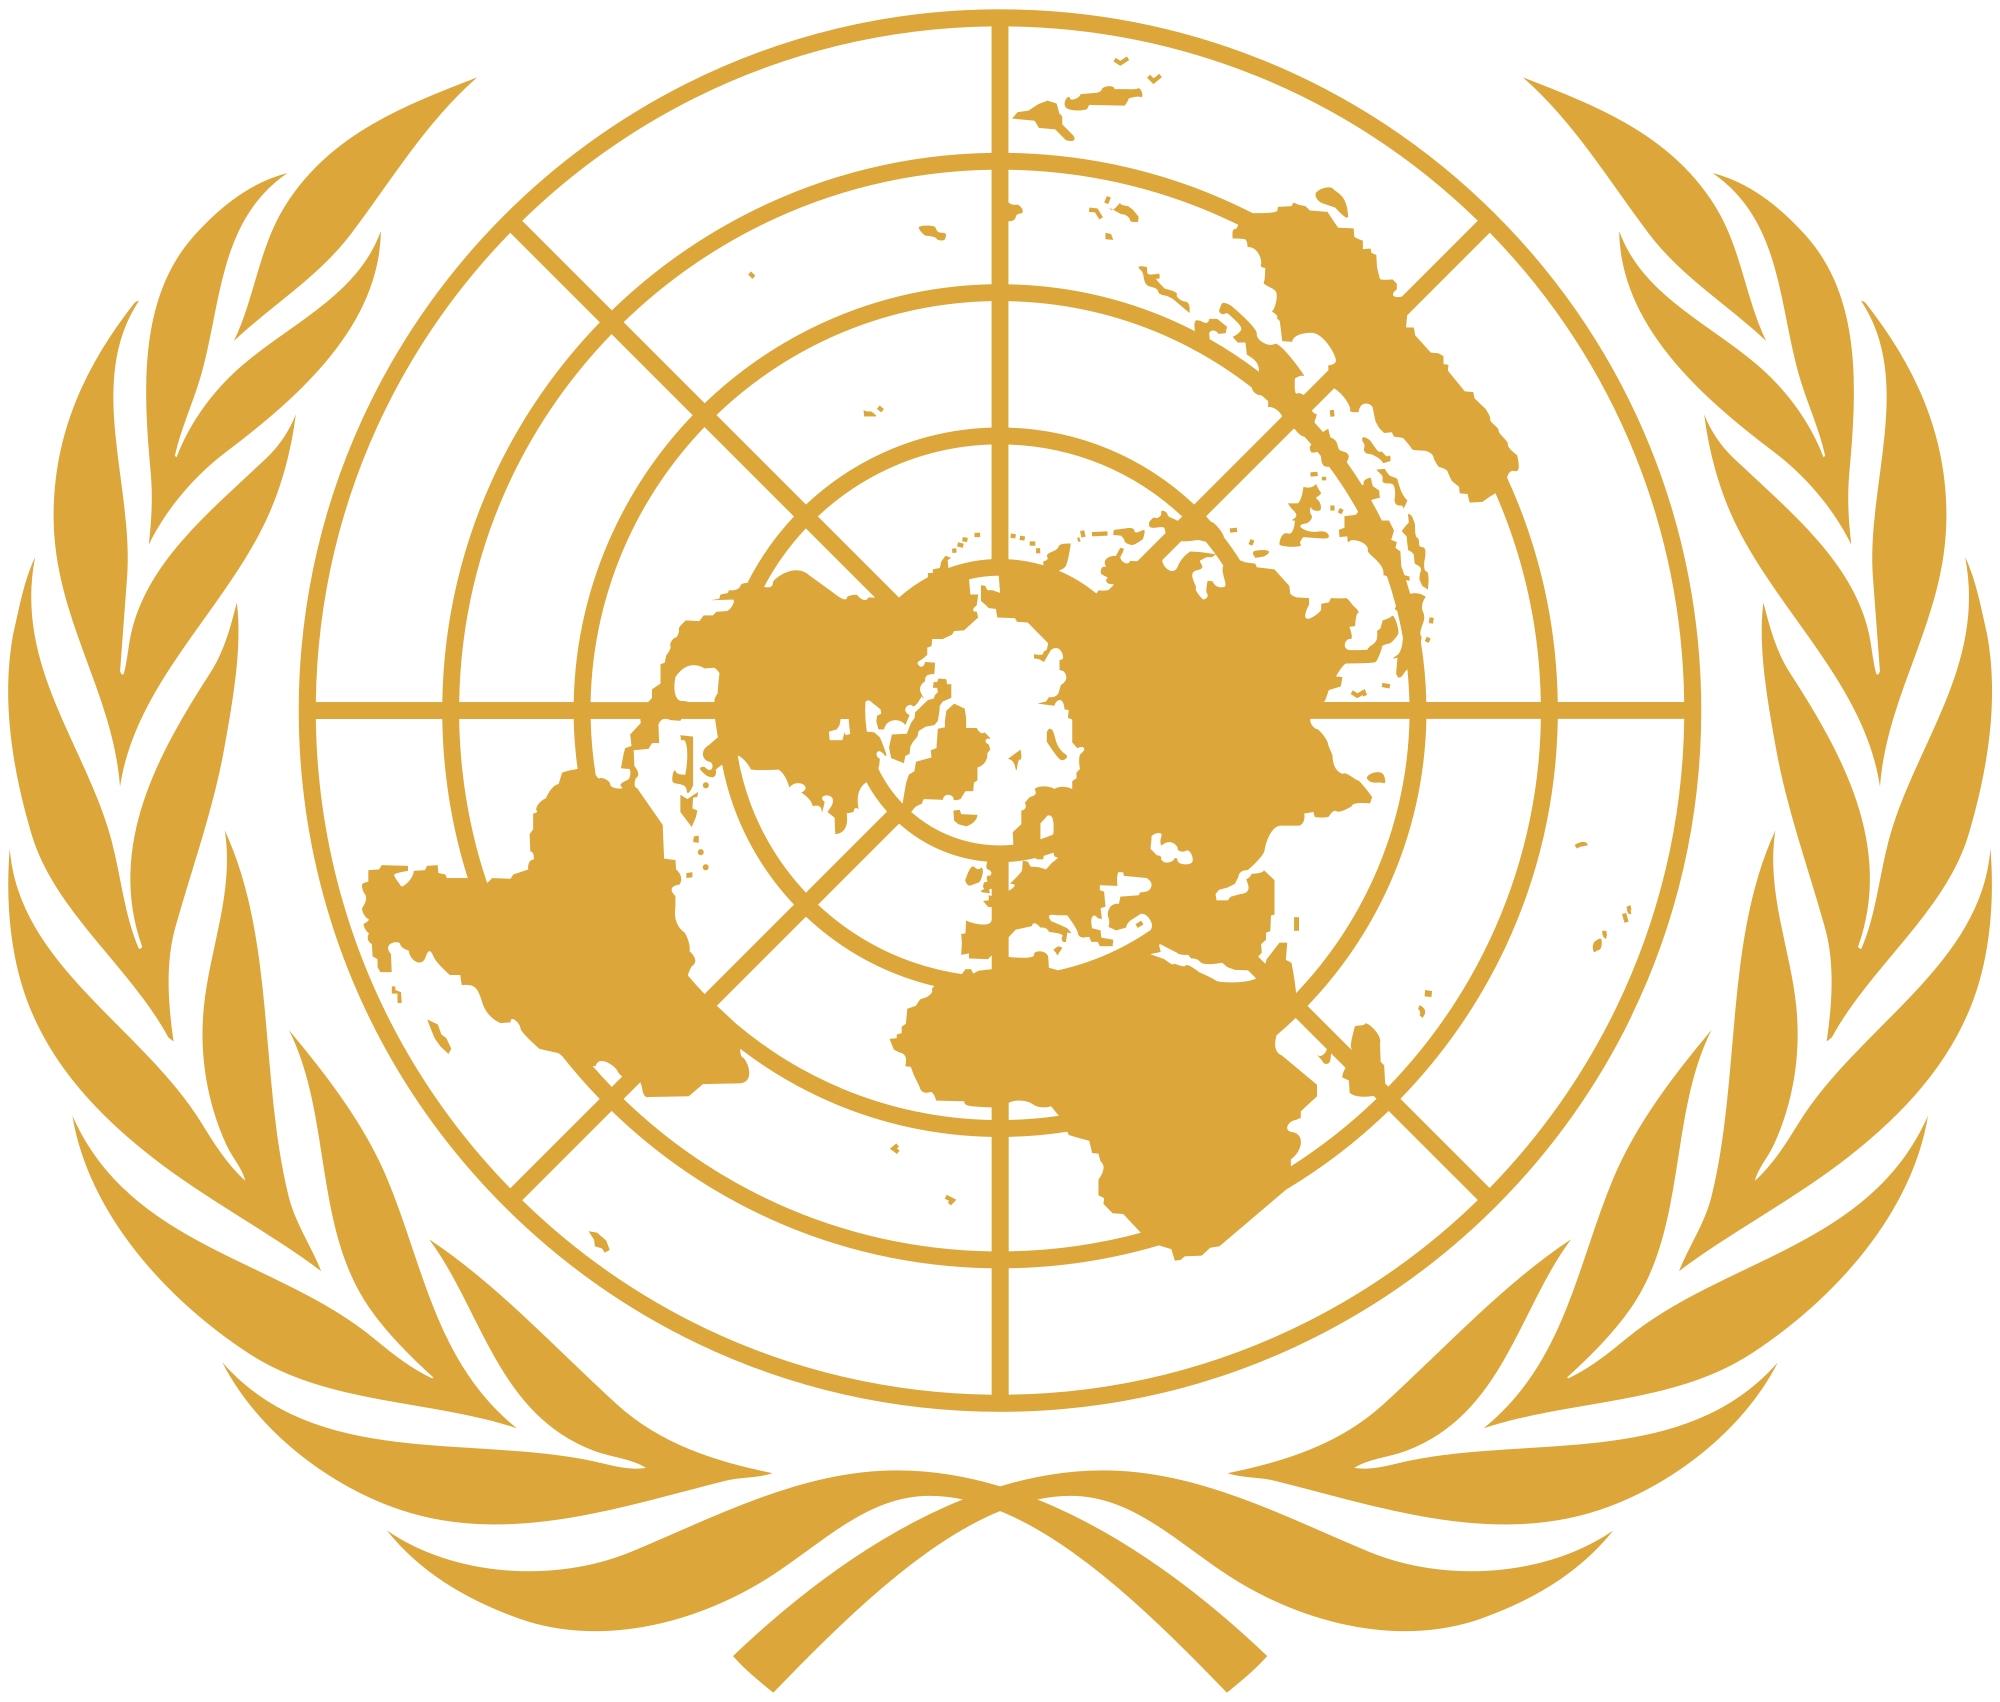 The United Nation's Emblem